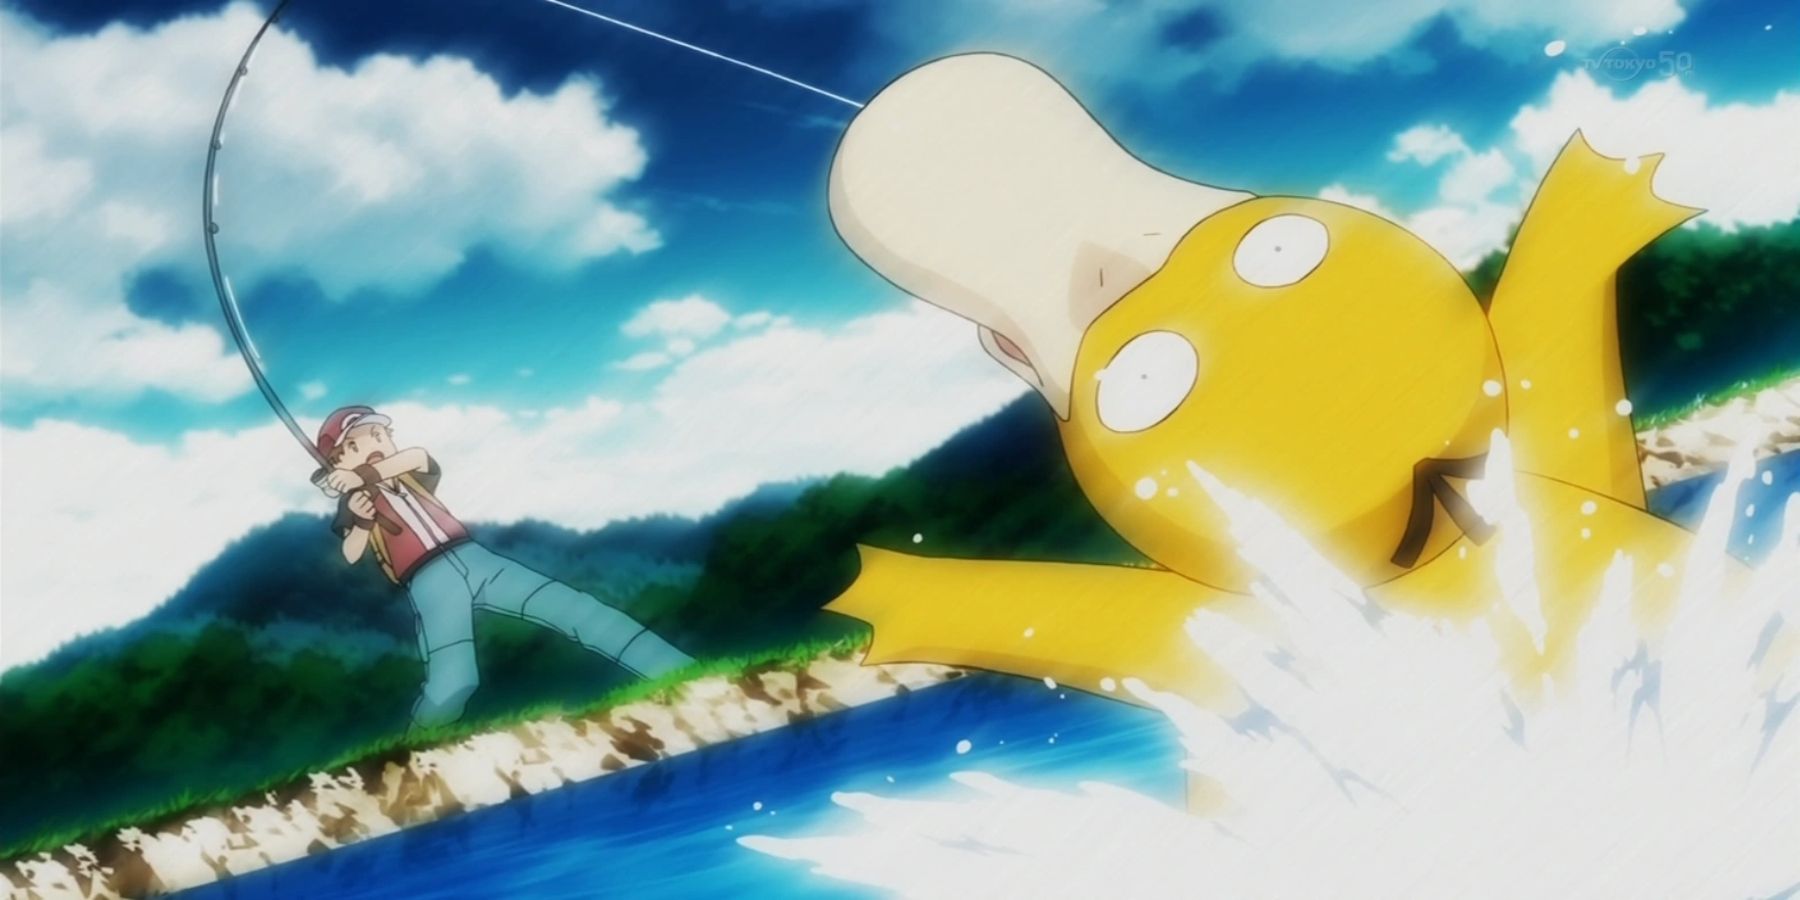 Pokemon Origins' Red catching a Psyduck via fishing.